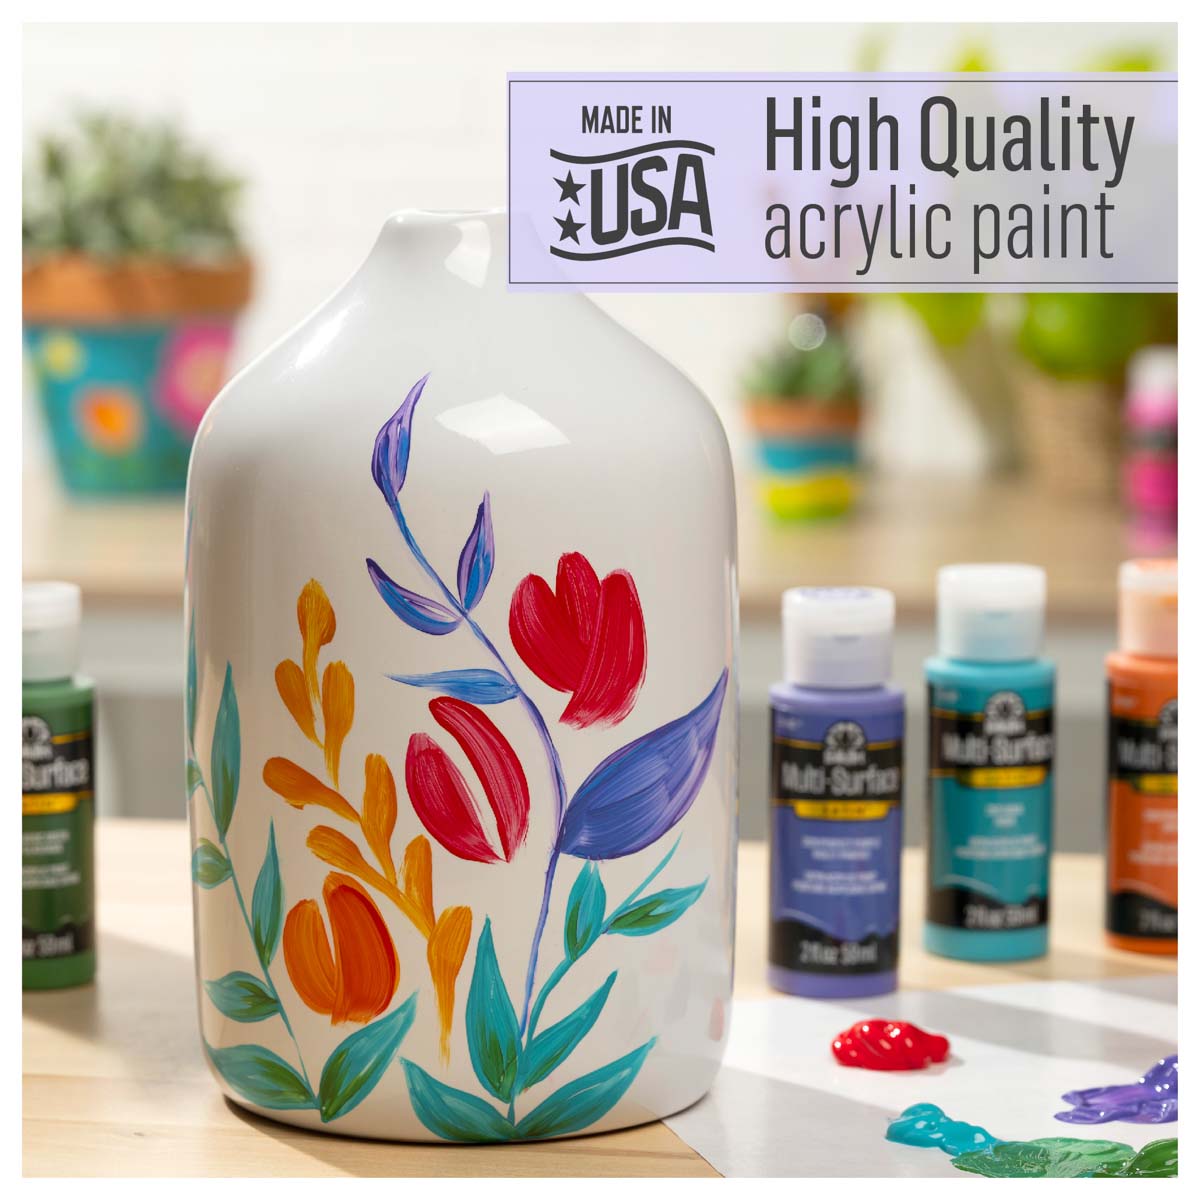 FolkArt ® Multi-Surface Satin Acrylic Paints - Camel, 2 oz. - 2945